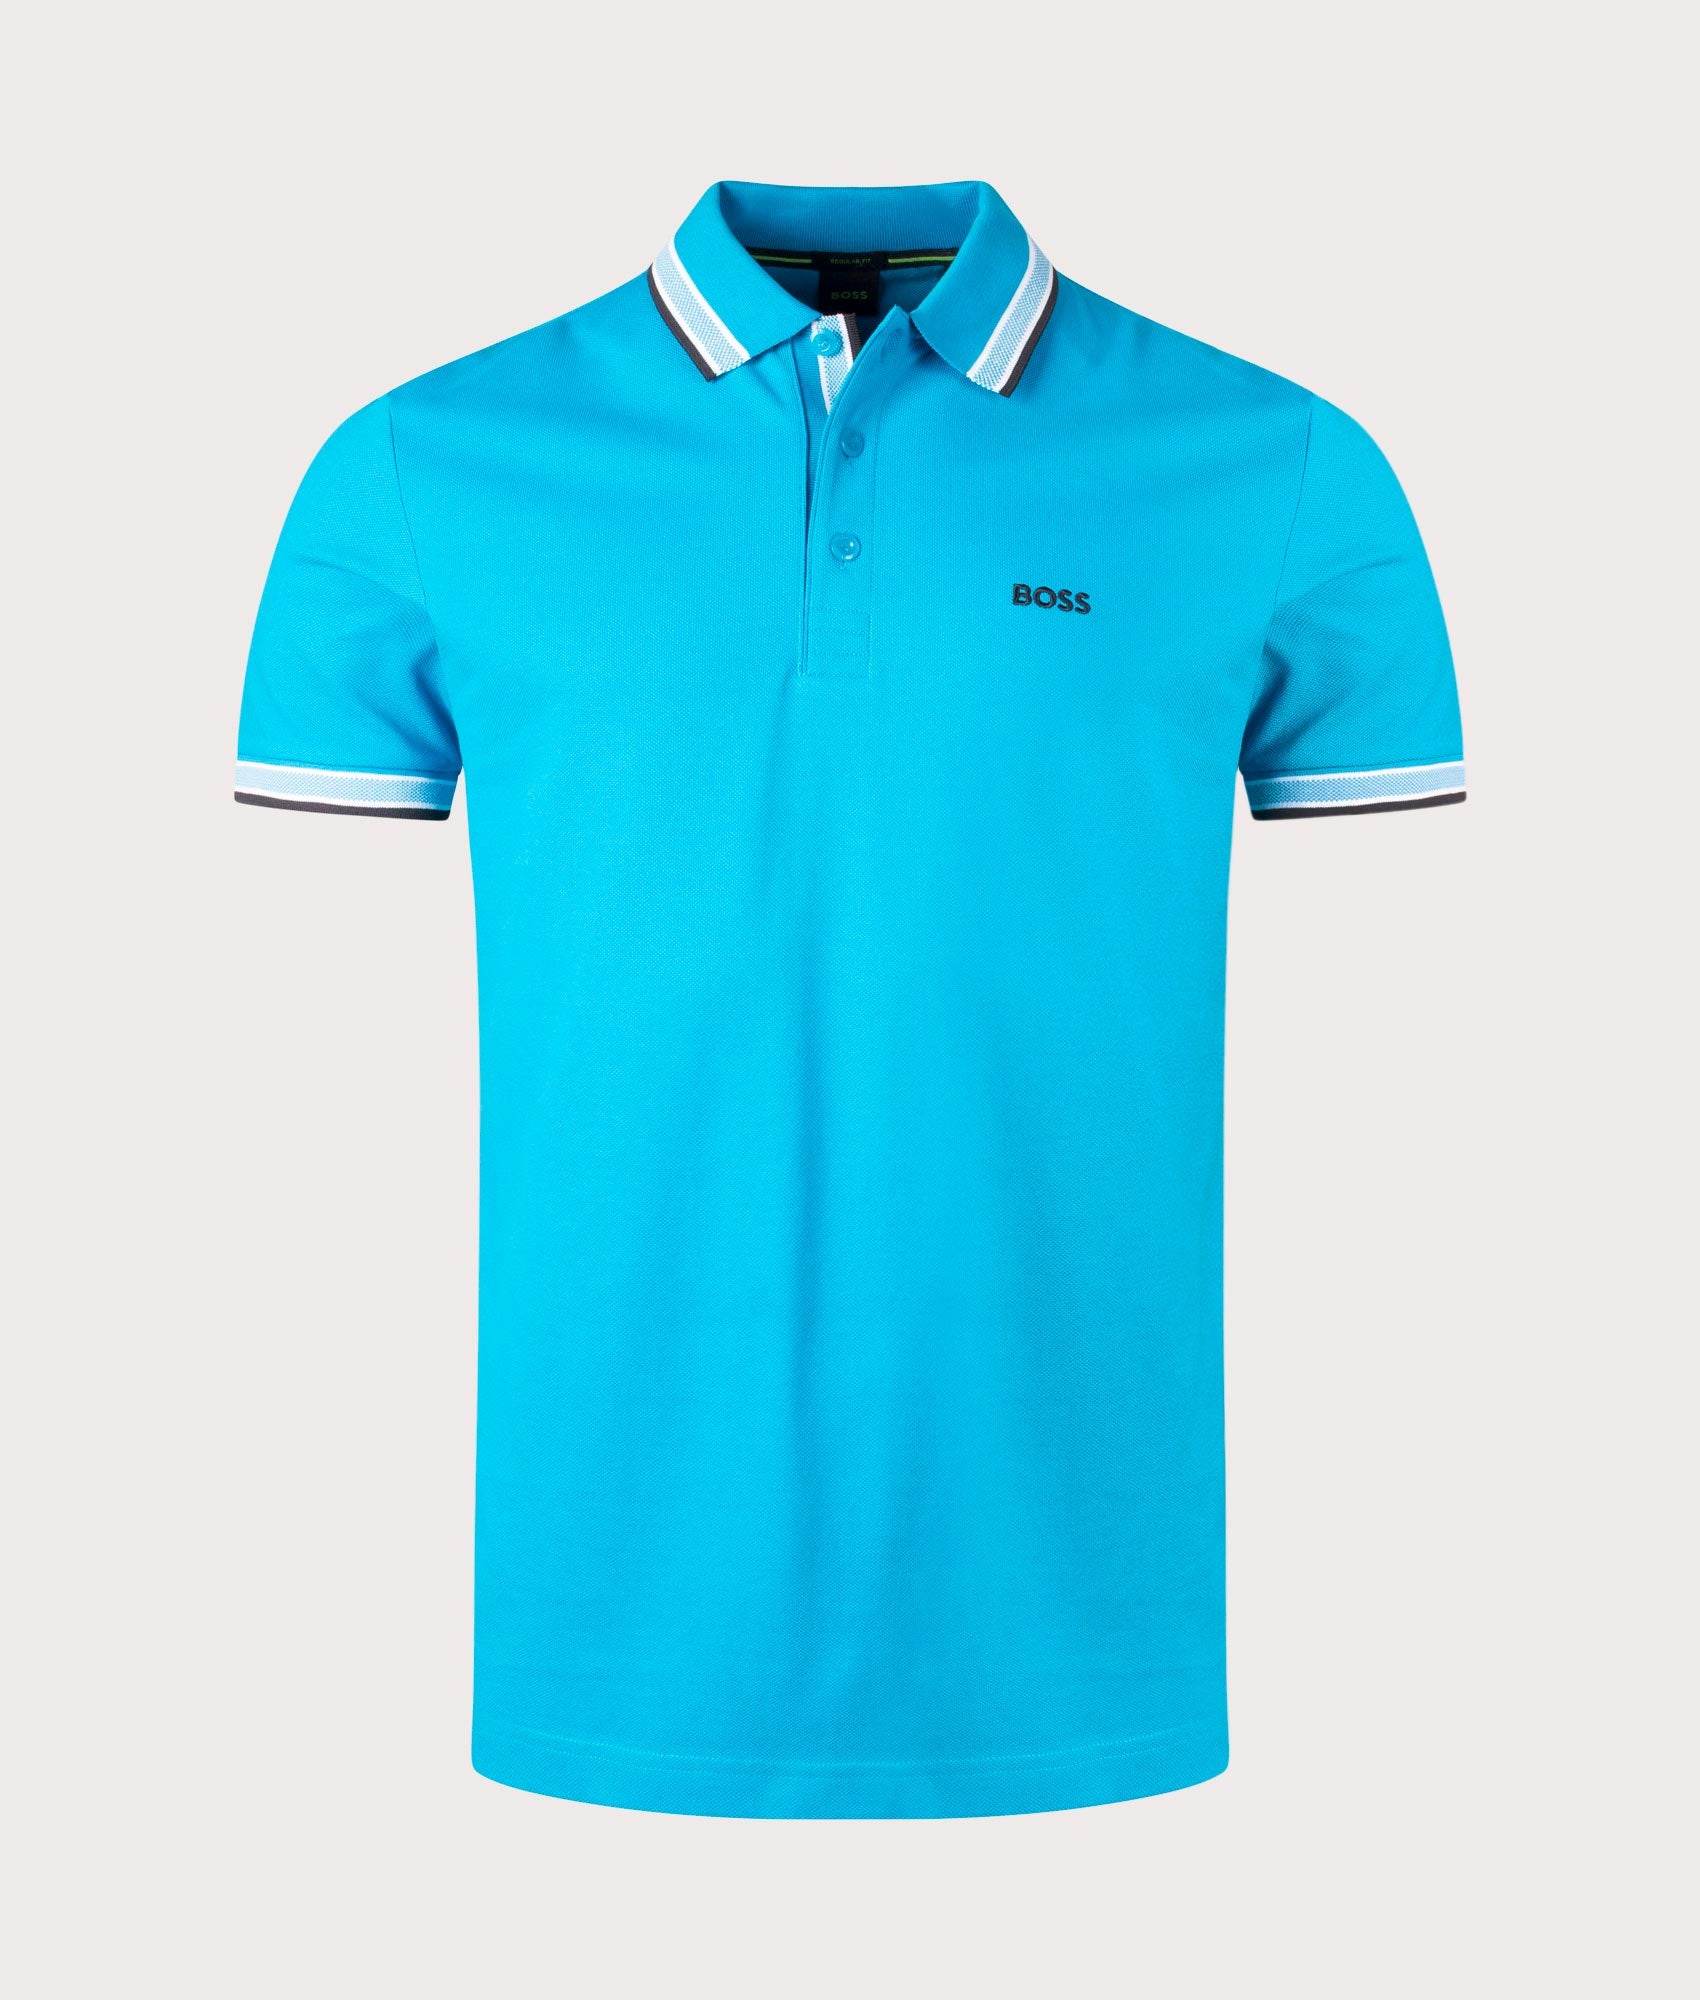 BOSS Mens Paddy Polo Shirt - Colour: 442 Turquoise/Aqua - Size: Large